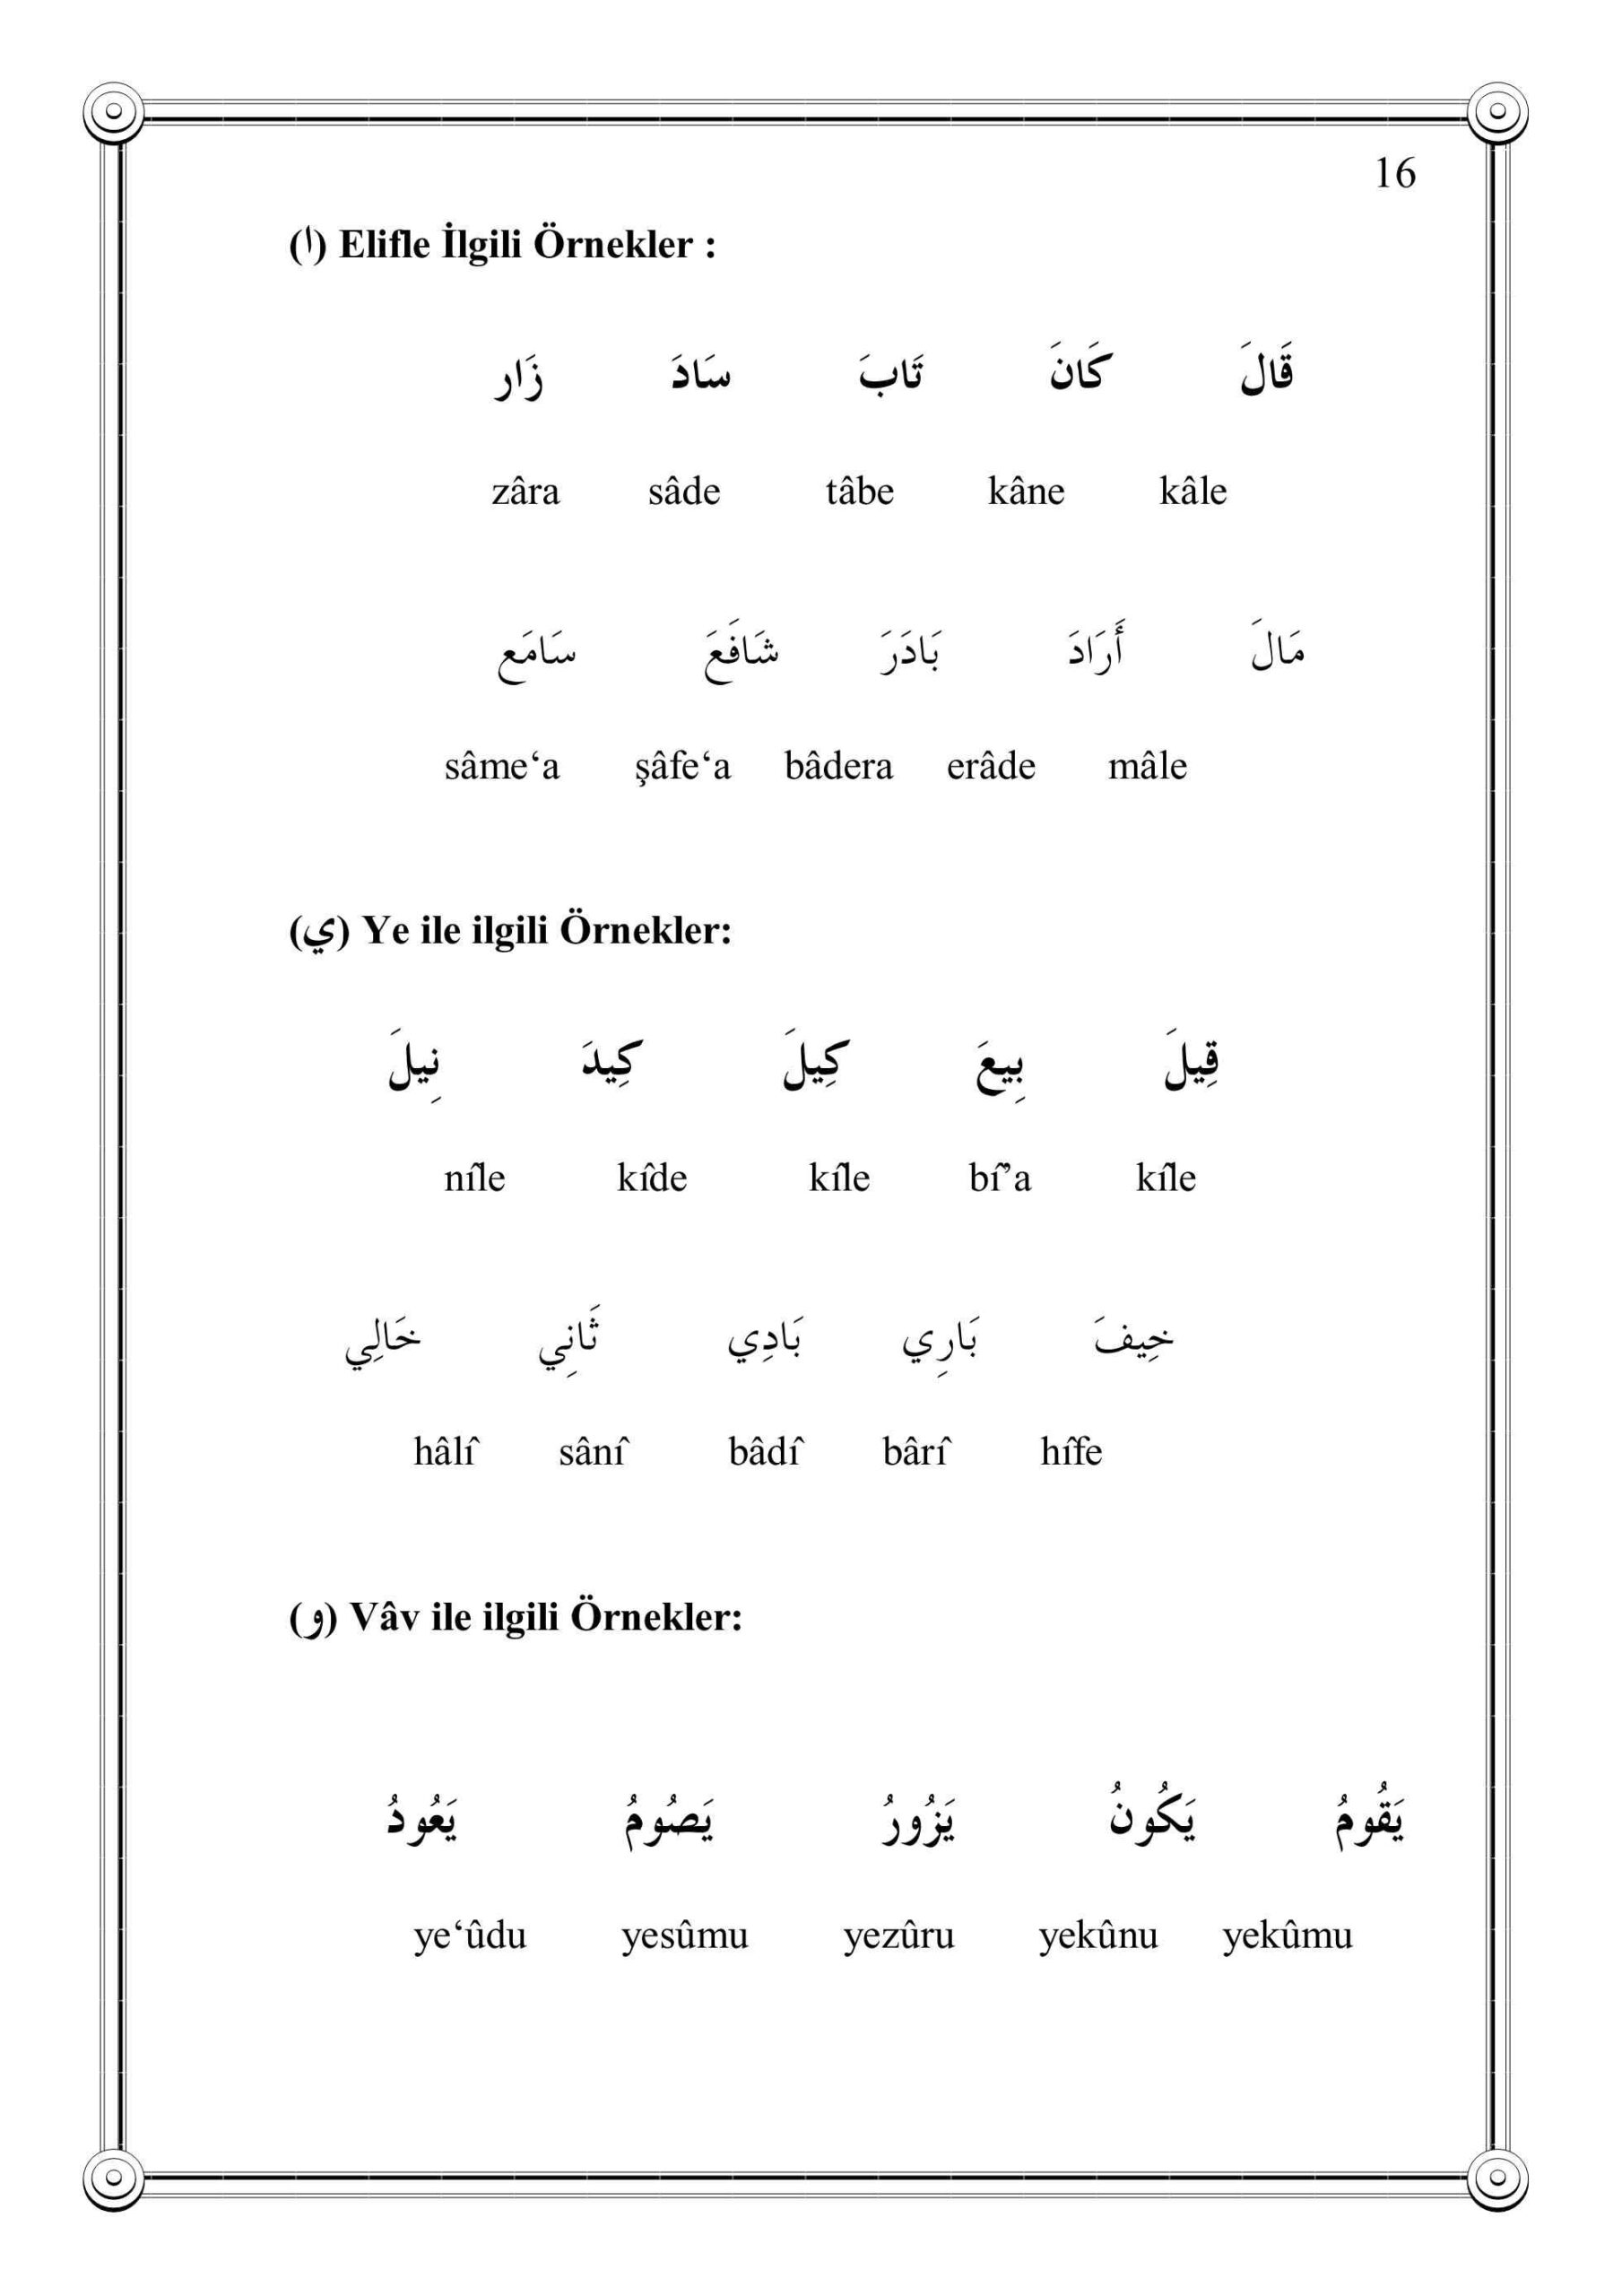 Arapca Konusma Dersleri-0 - Hazirlik Kitabi - IsikAkademiY.pdf, 95-Sayfa 